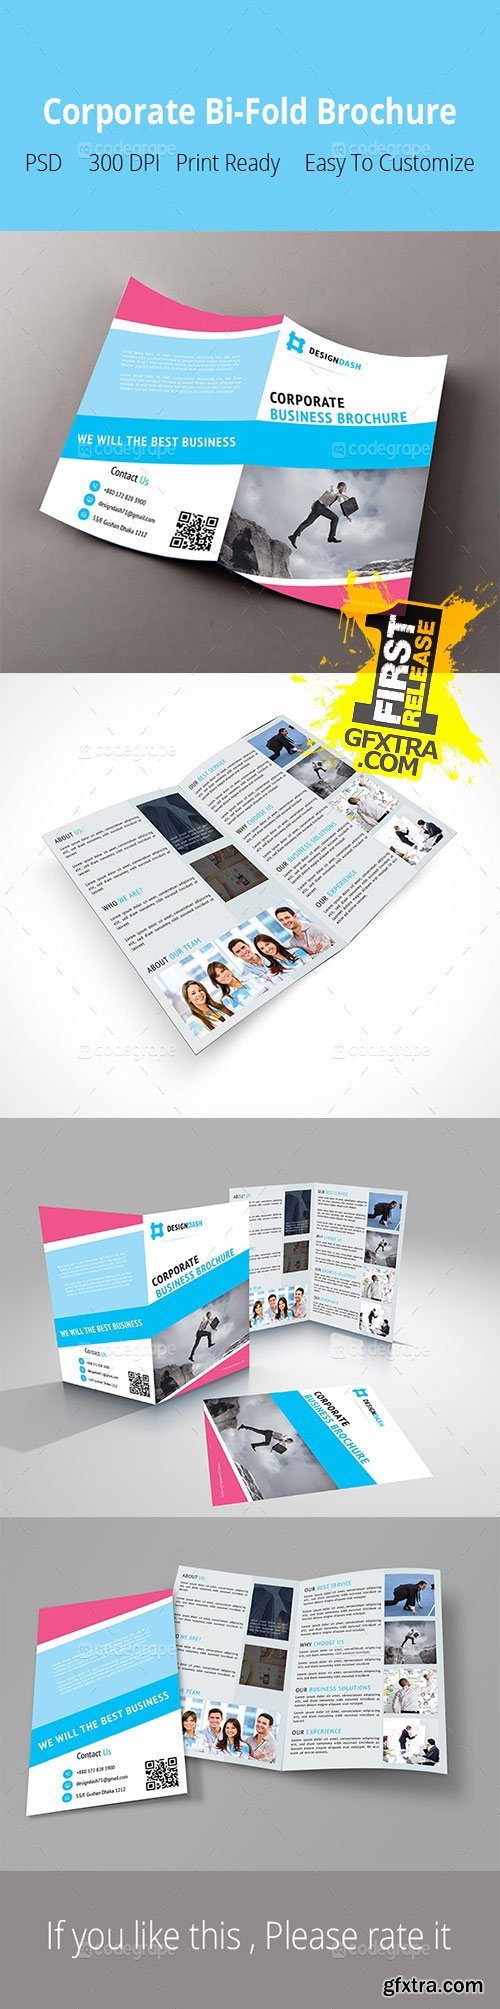 CodeGrape - Corporate Bi-Fold Brochure Design 5125